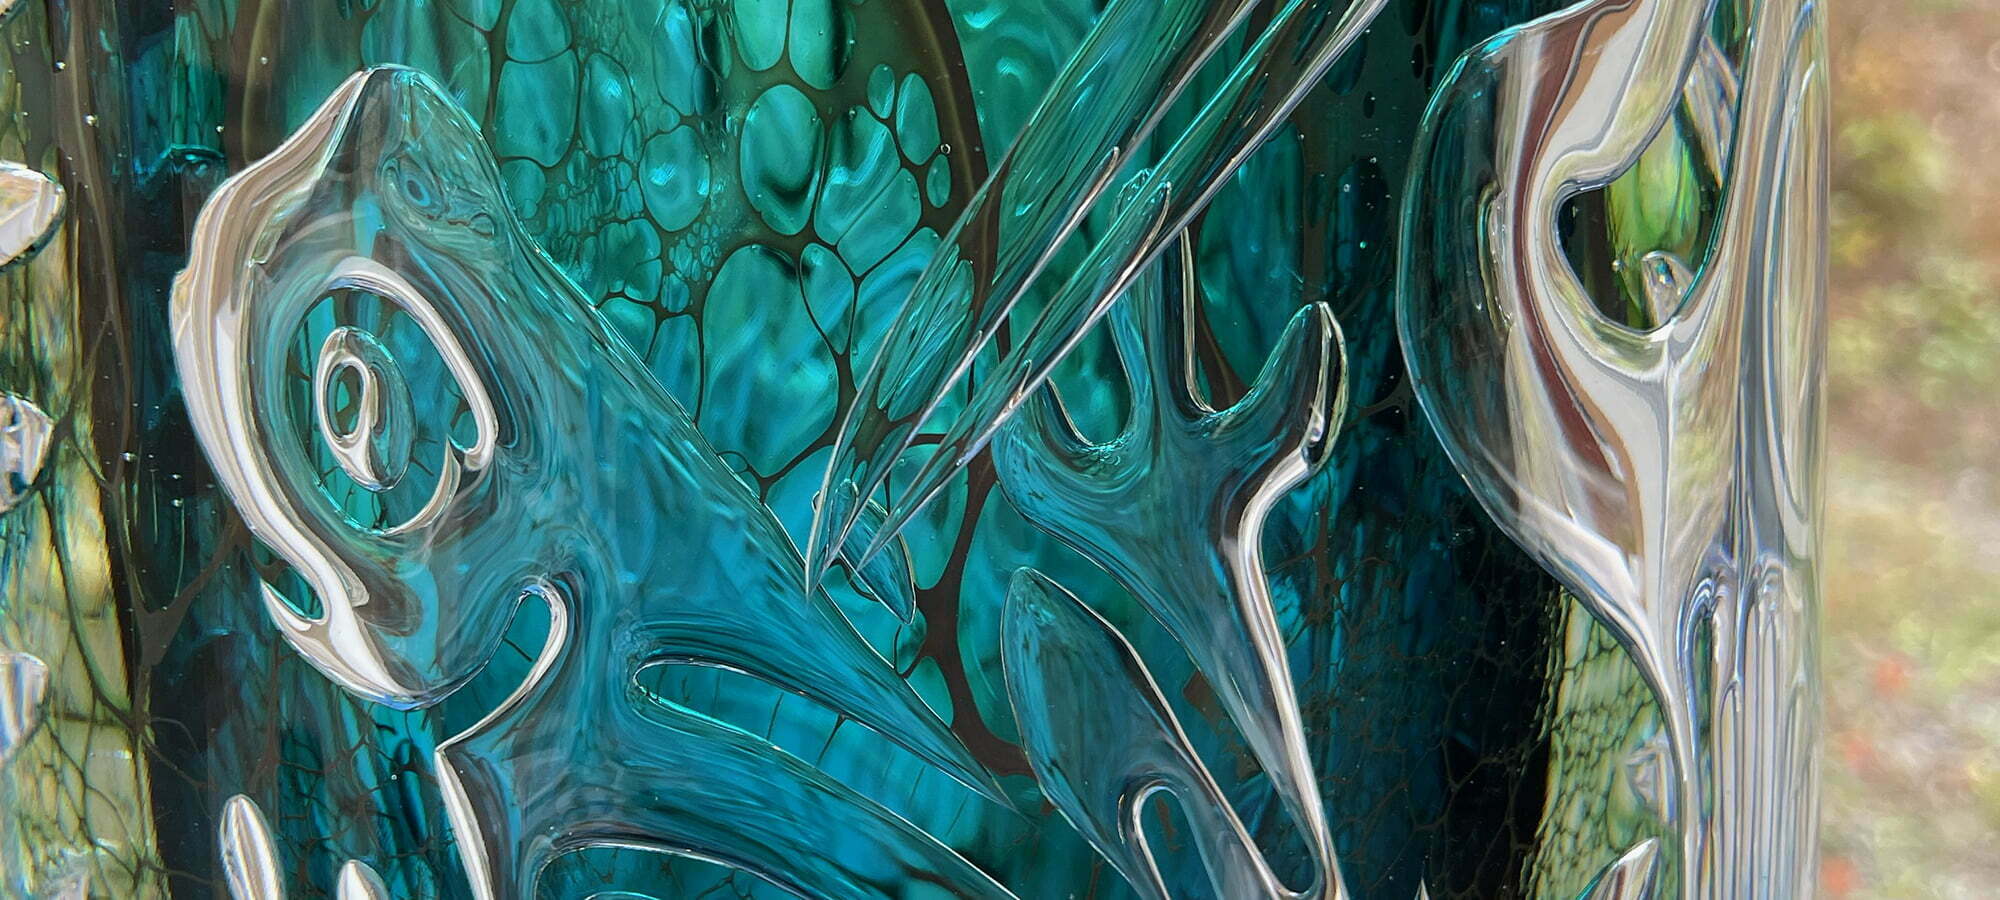 Glass sculpture made from Mickejohan's art glass, Glasriket